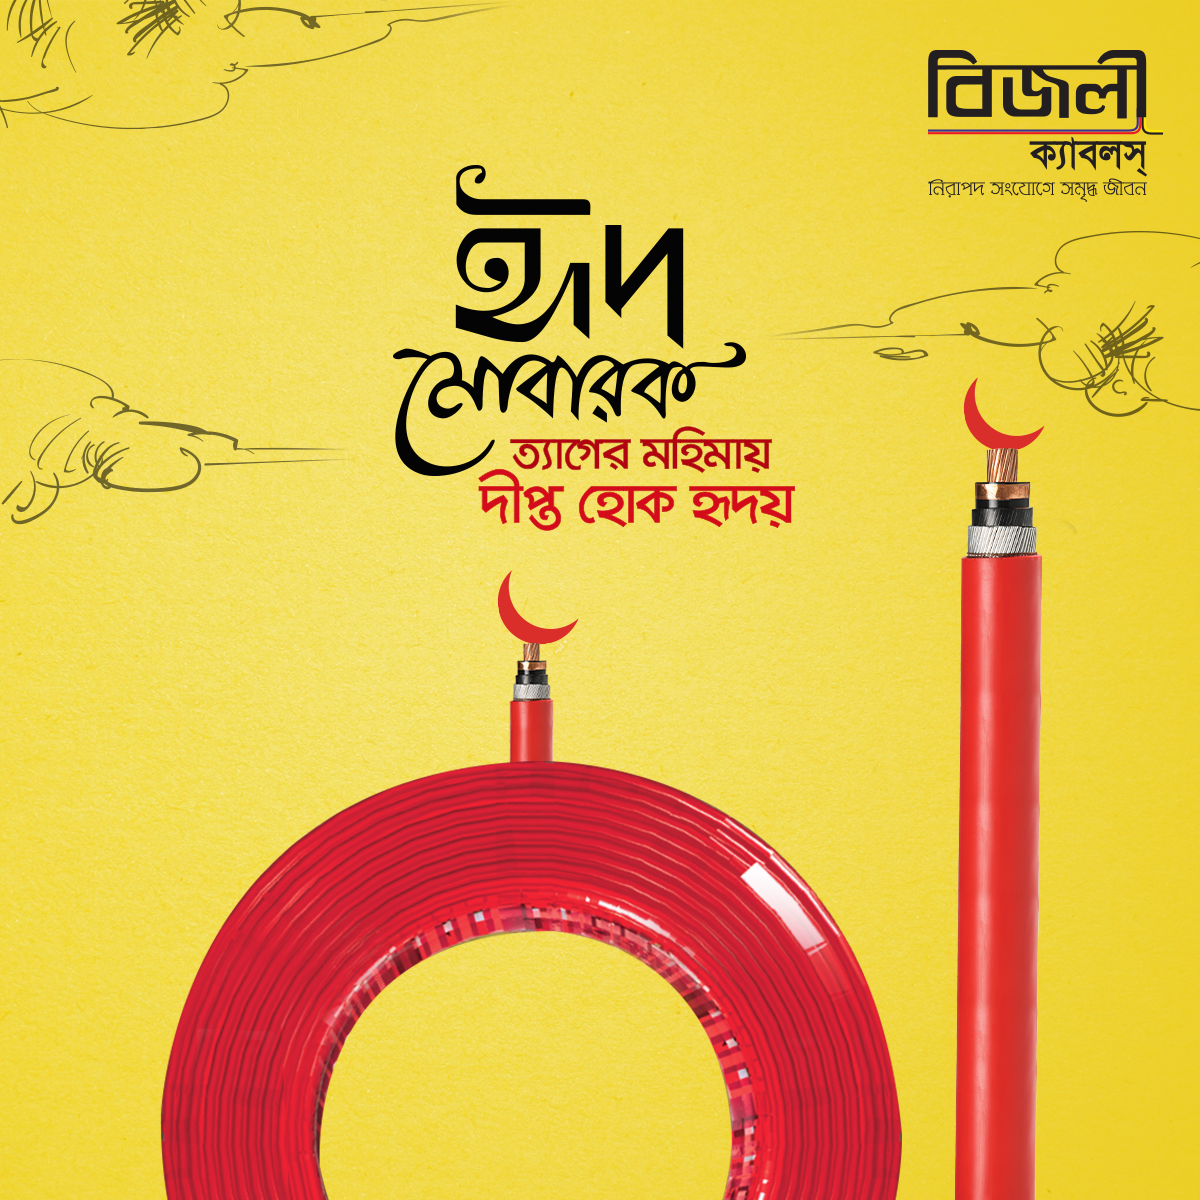 Bizli Cable Eid Cricket Bangladesh islamic advertisement Jabed Mahmud ad Pran RFL